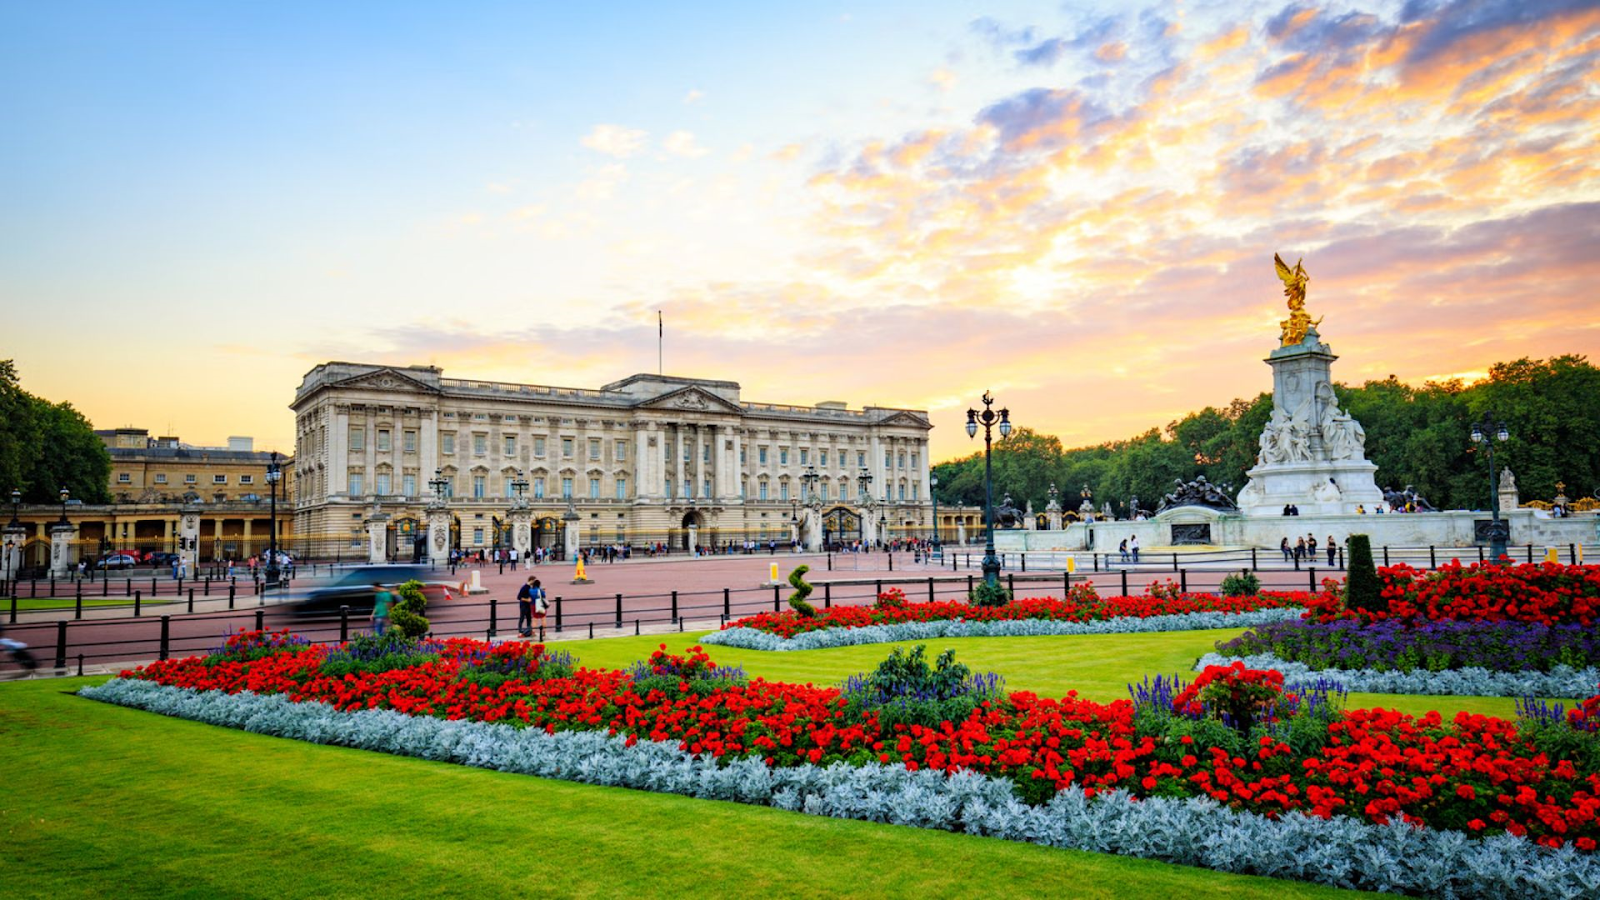 London's Buckingham Palace